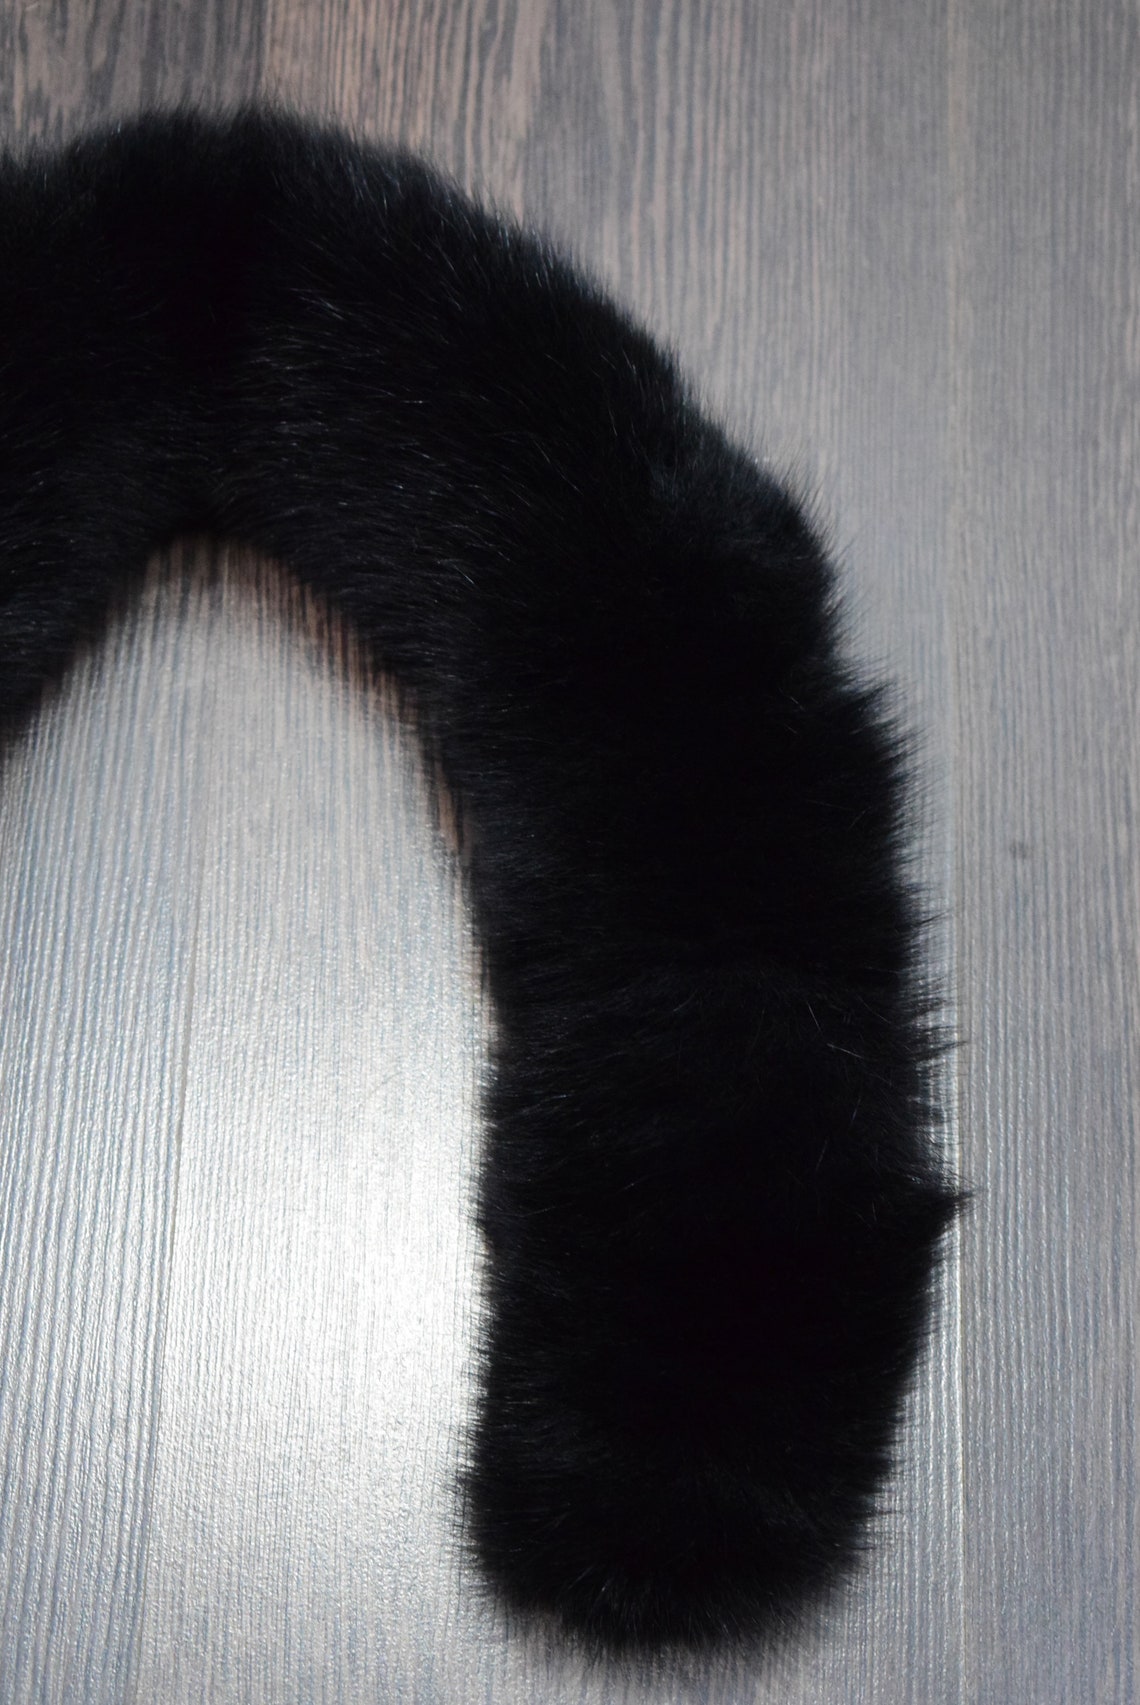 Fur Fox Trim for Hood Black Color / Fur Strips Accessories for | Etsy